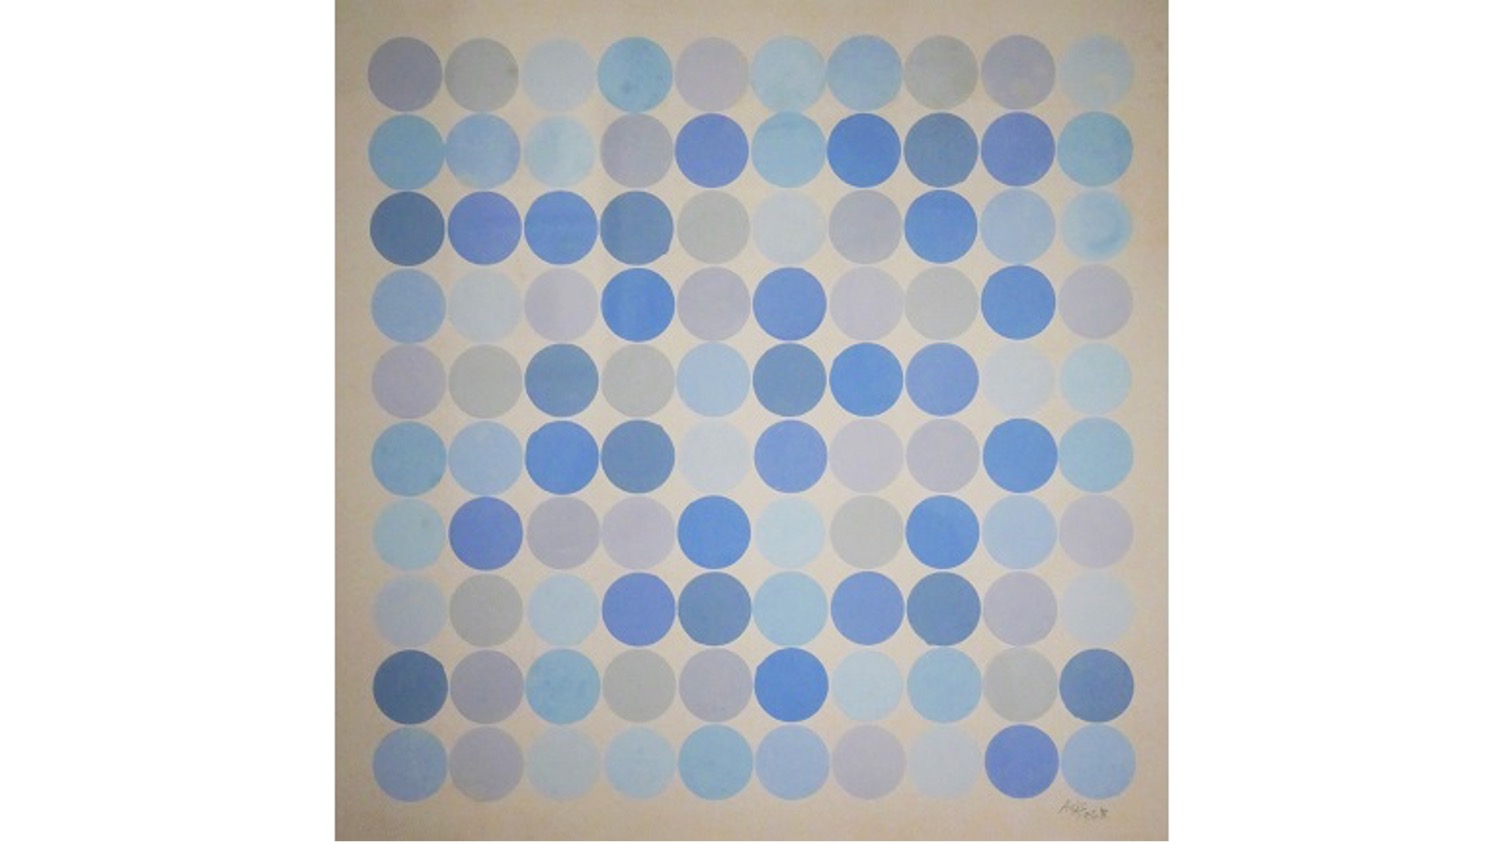 Antonio Asis. Argentinian artist living in Paris, died in 2019, exhibited at Galeria Freijo in 2013. "File number: 2486, 1968. Mixed media on cardboard. 31 x 31 cm.